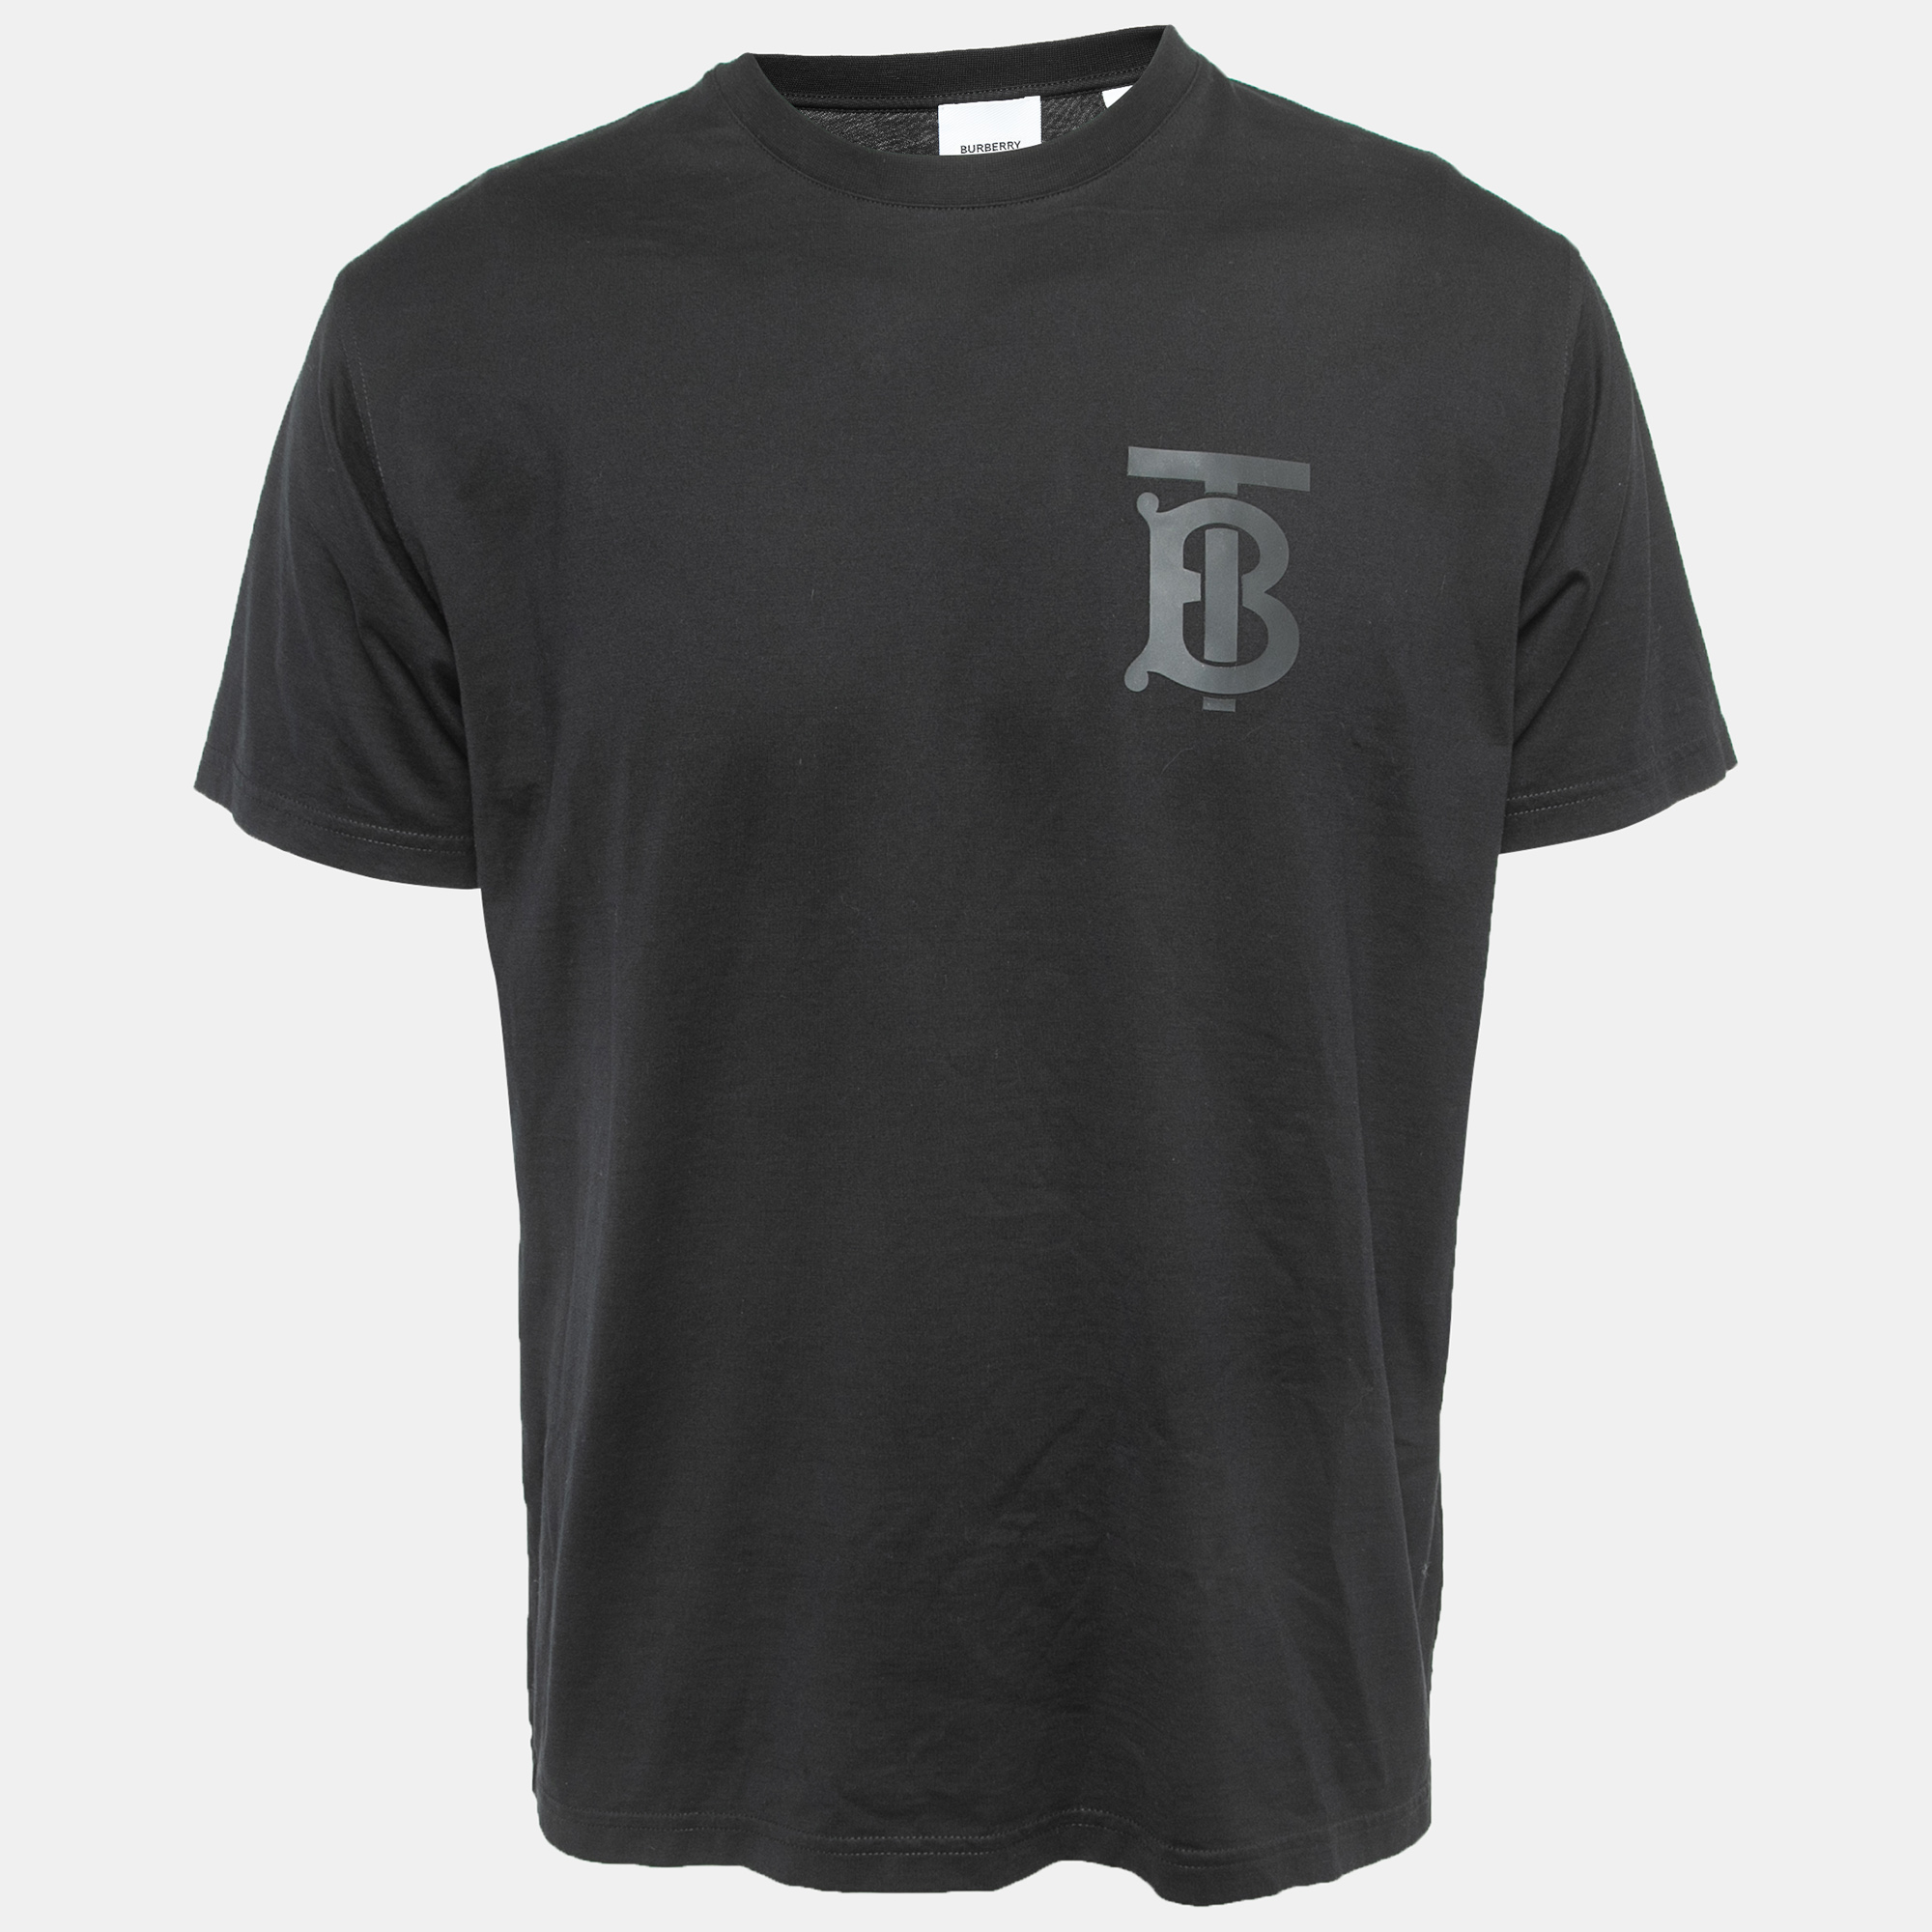 Burberry Black Monogram Printed Cotton Knit T-Shirt XS